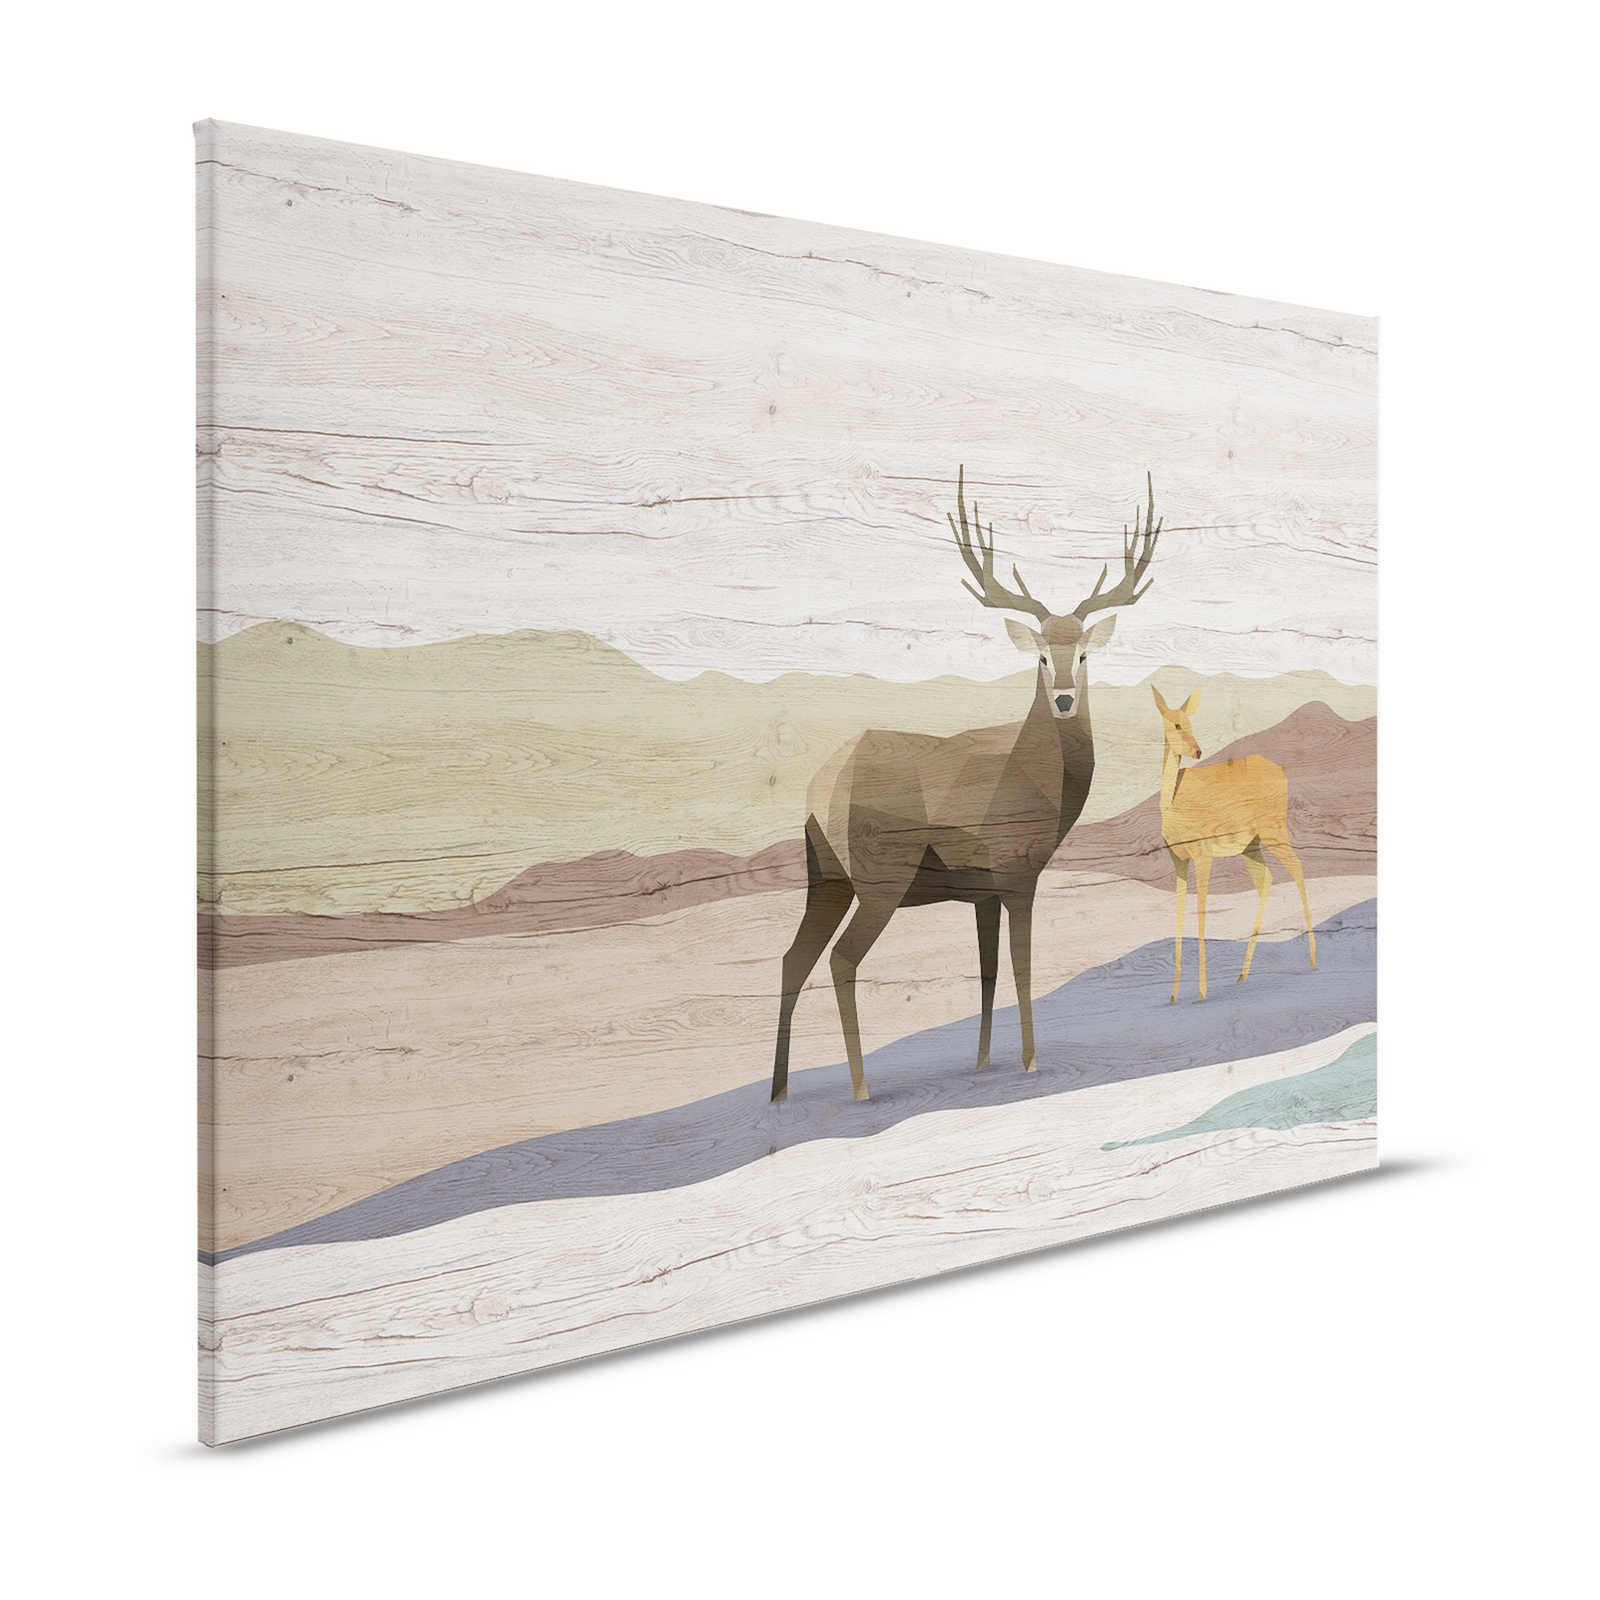 Yukon 2 - Canvas schilderij houtnerf, ontwerp hert & ree - 1.20 m x 0.80 m
